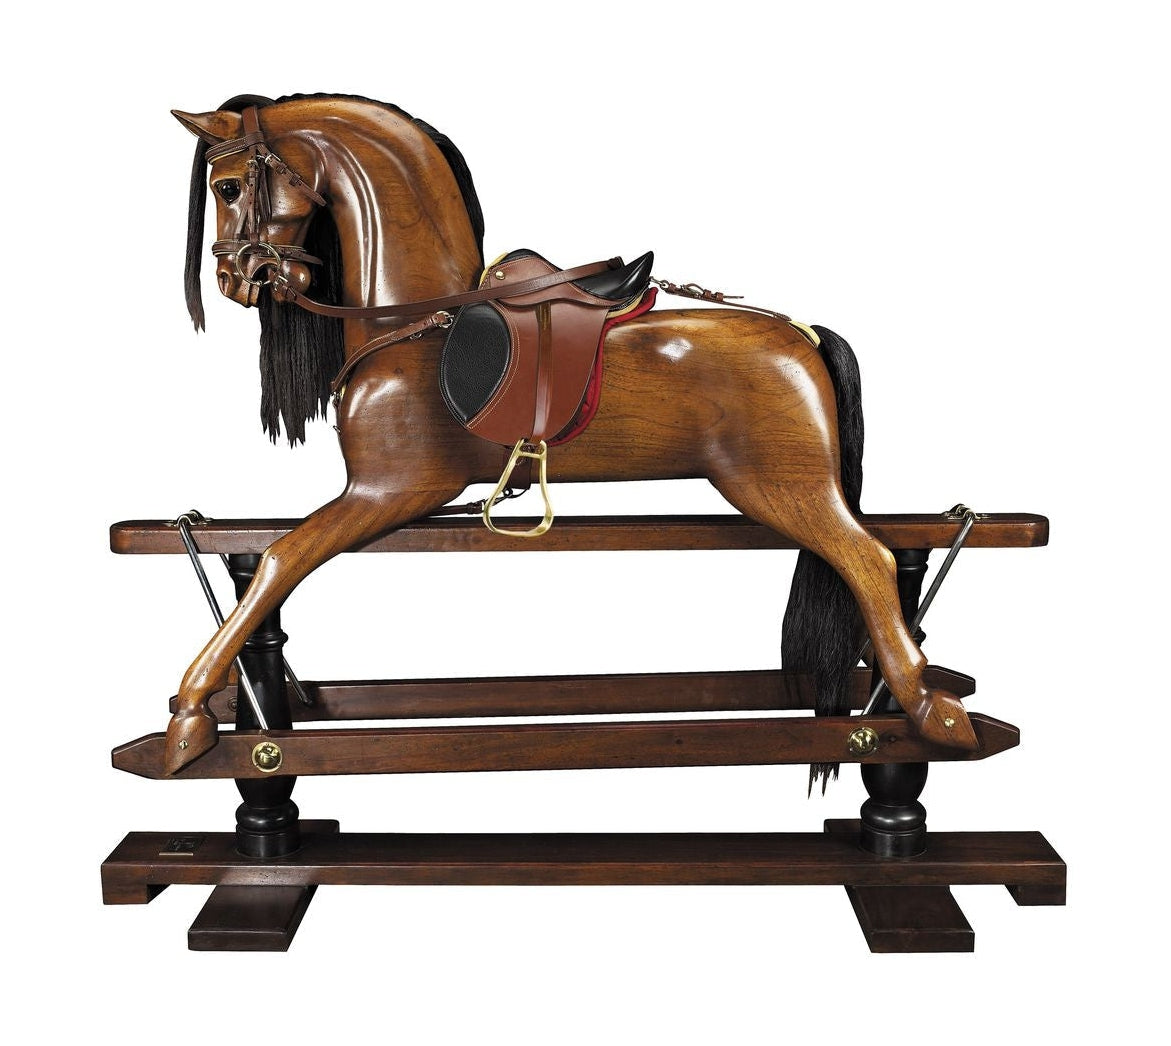 Modelos auténticos réplica de caballos de balanceo victoriano, acabado